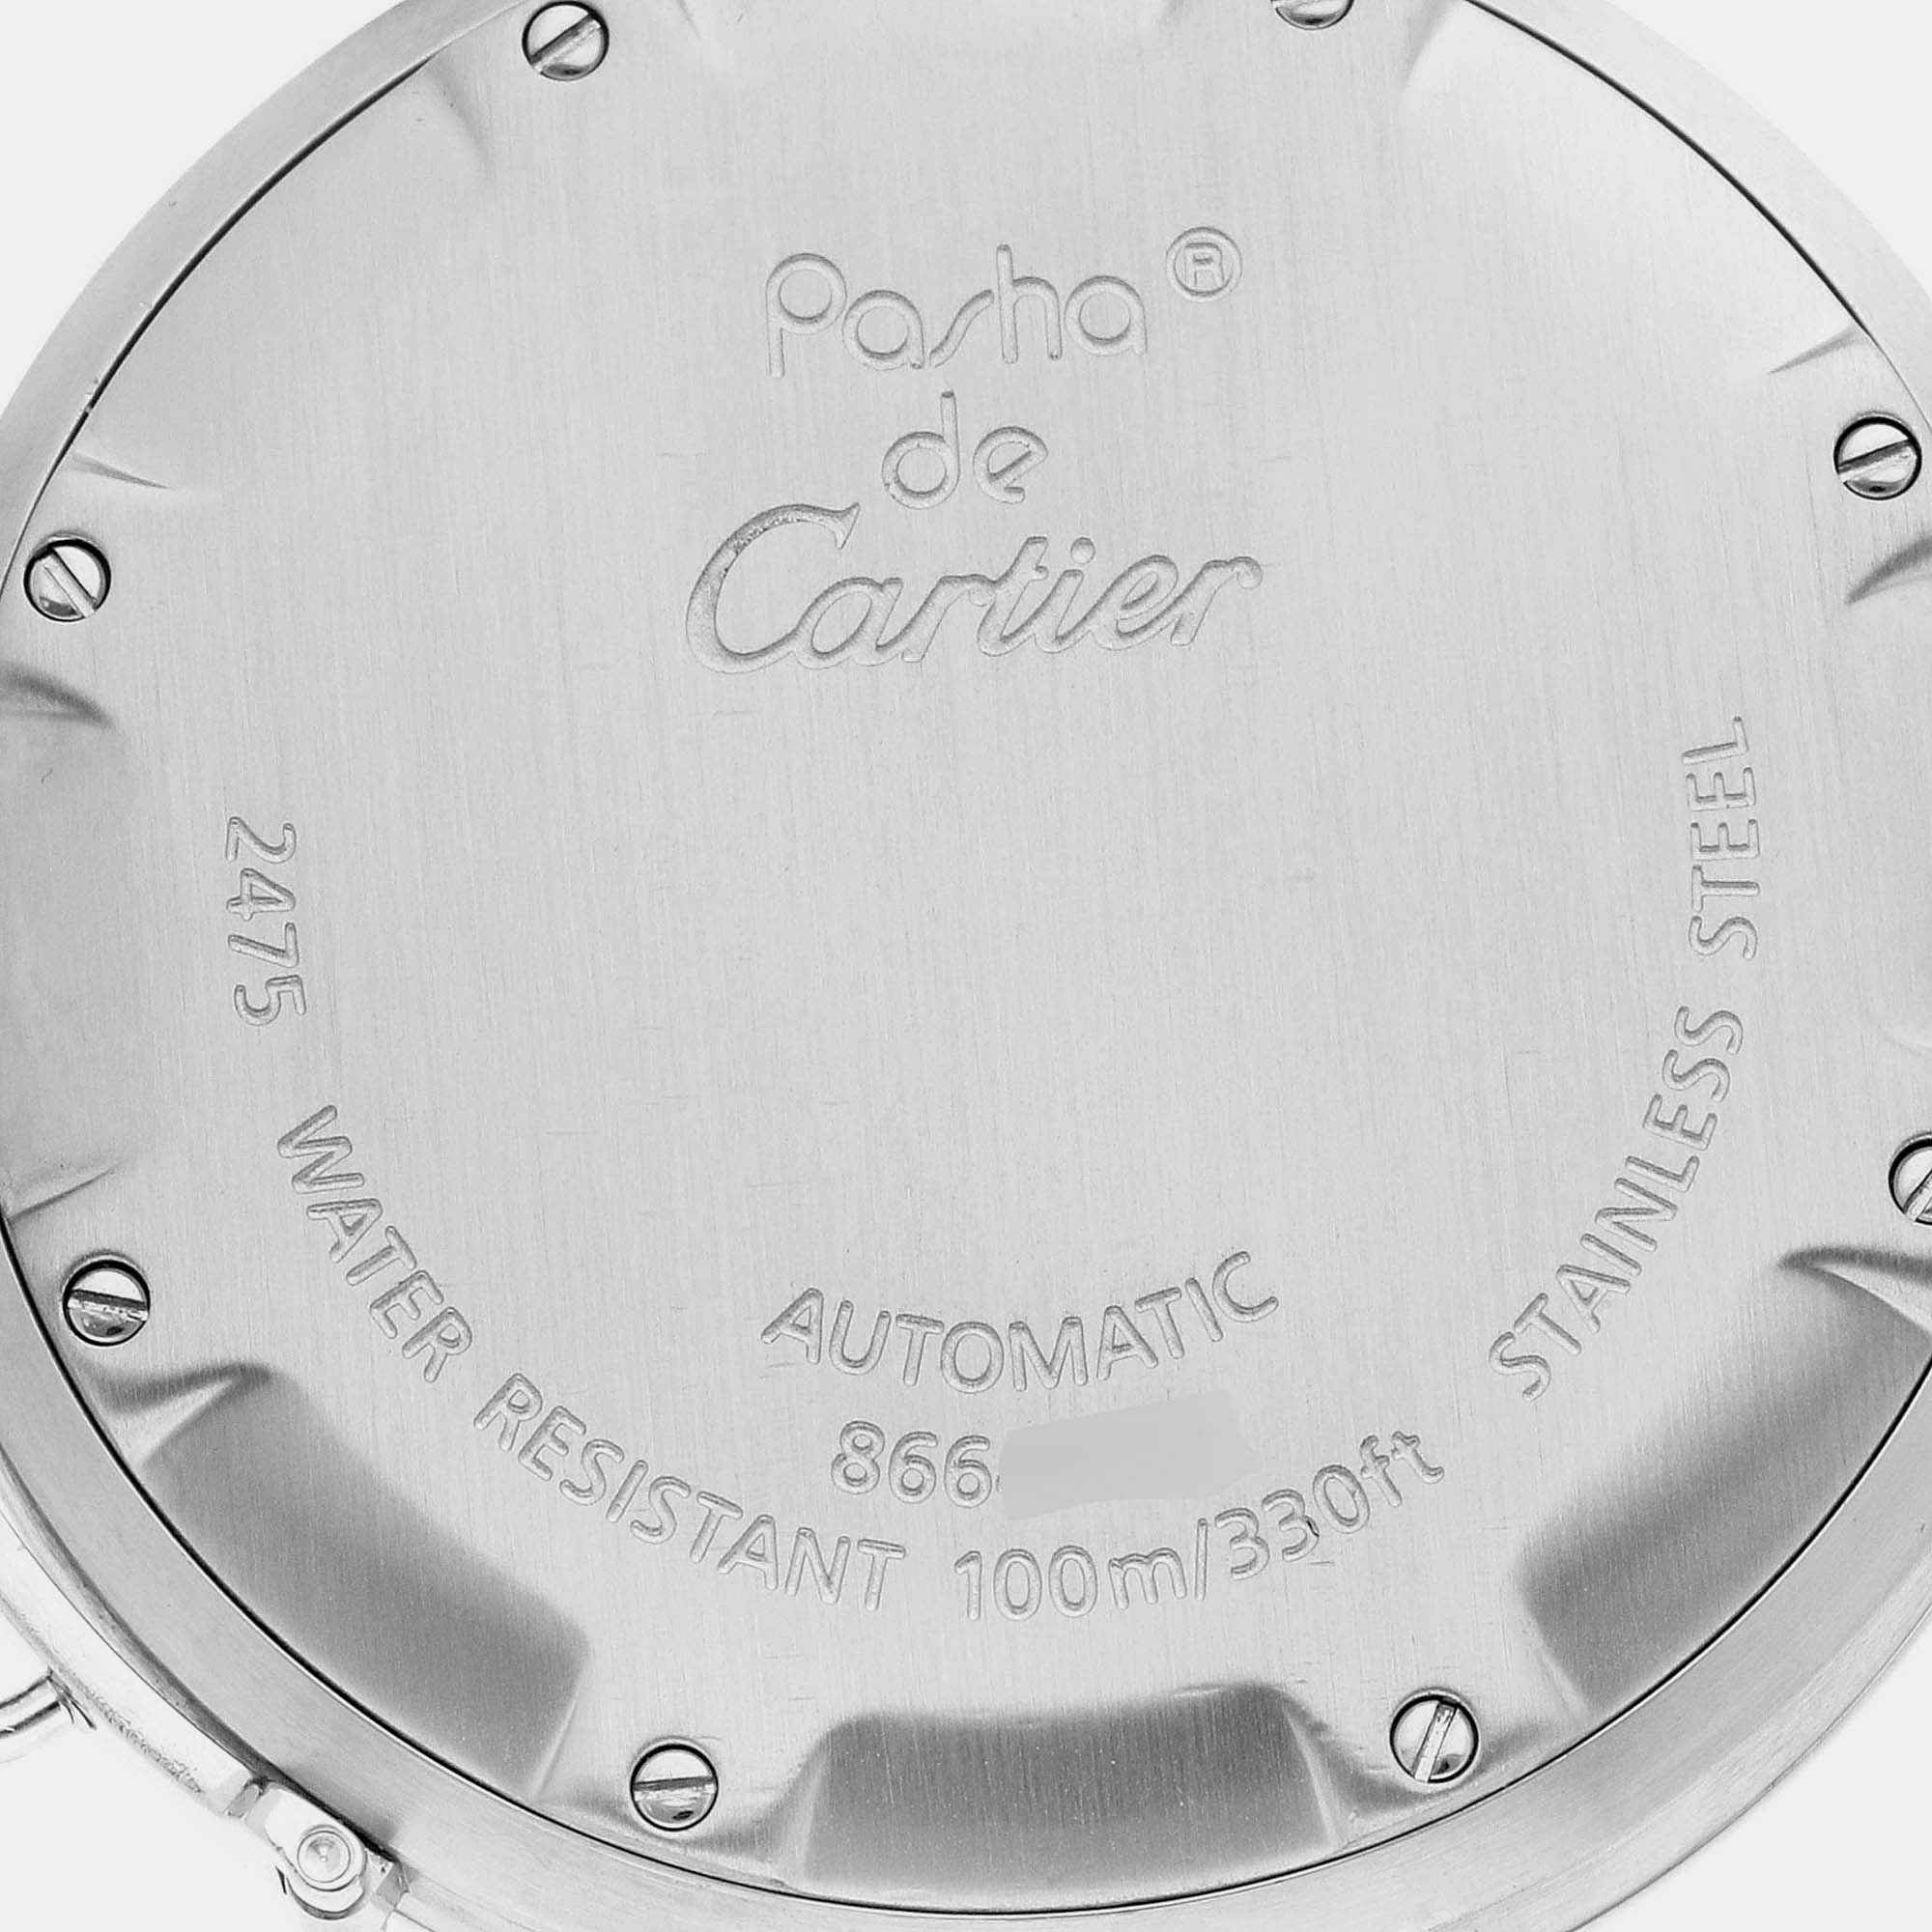 Cartier Pasha C Midsize Big Date White Dial Steel Mens Watch W31044M7 35 Mm